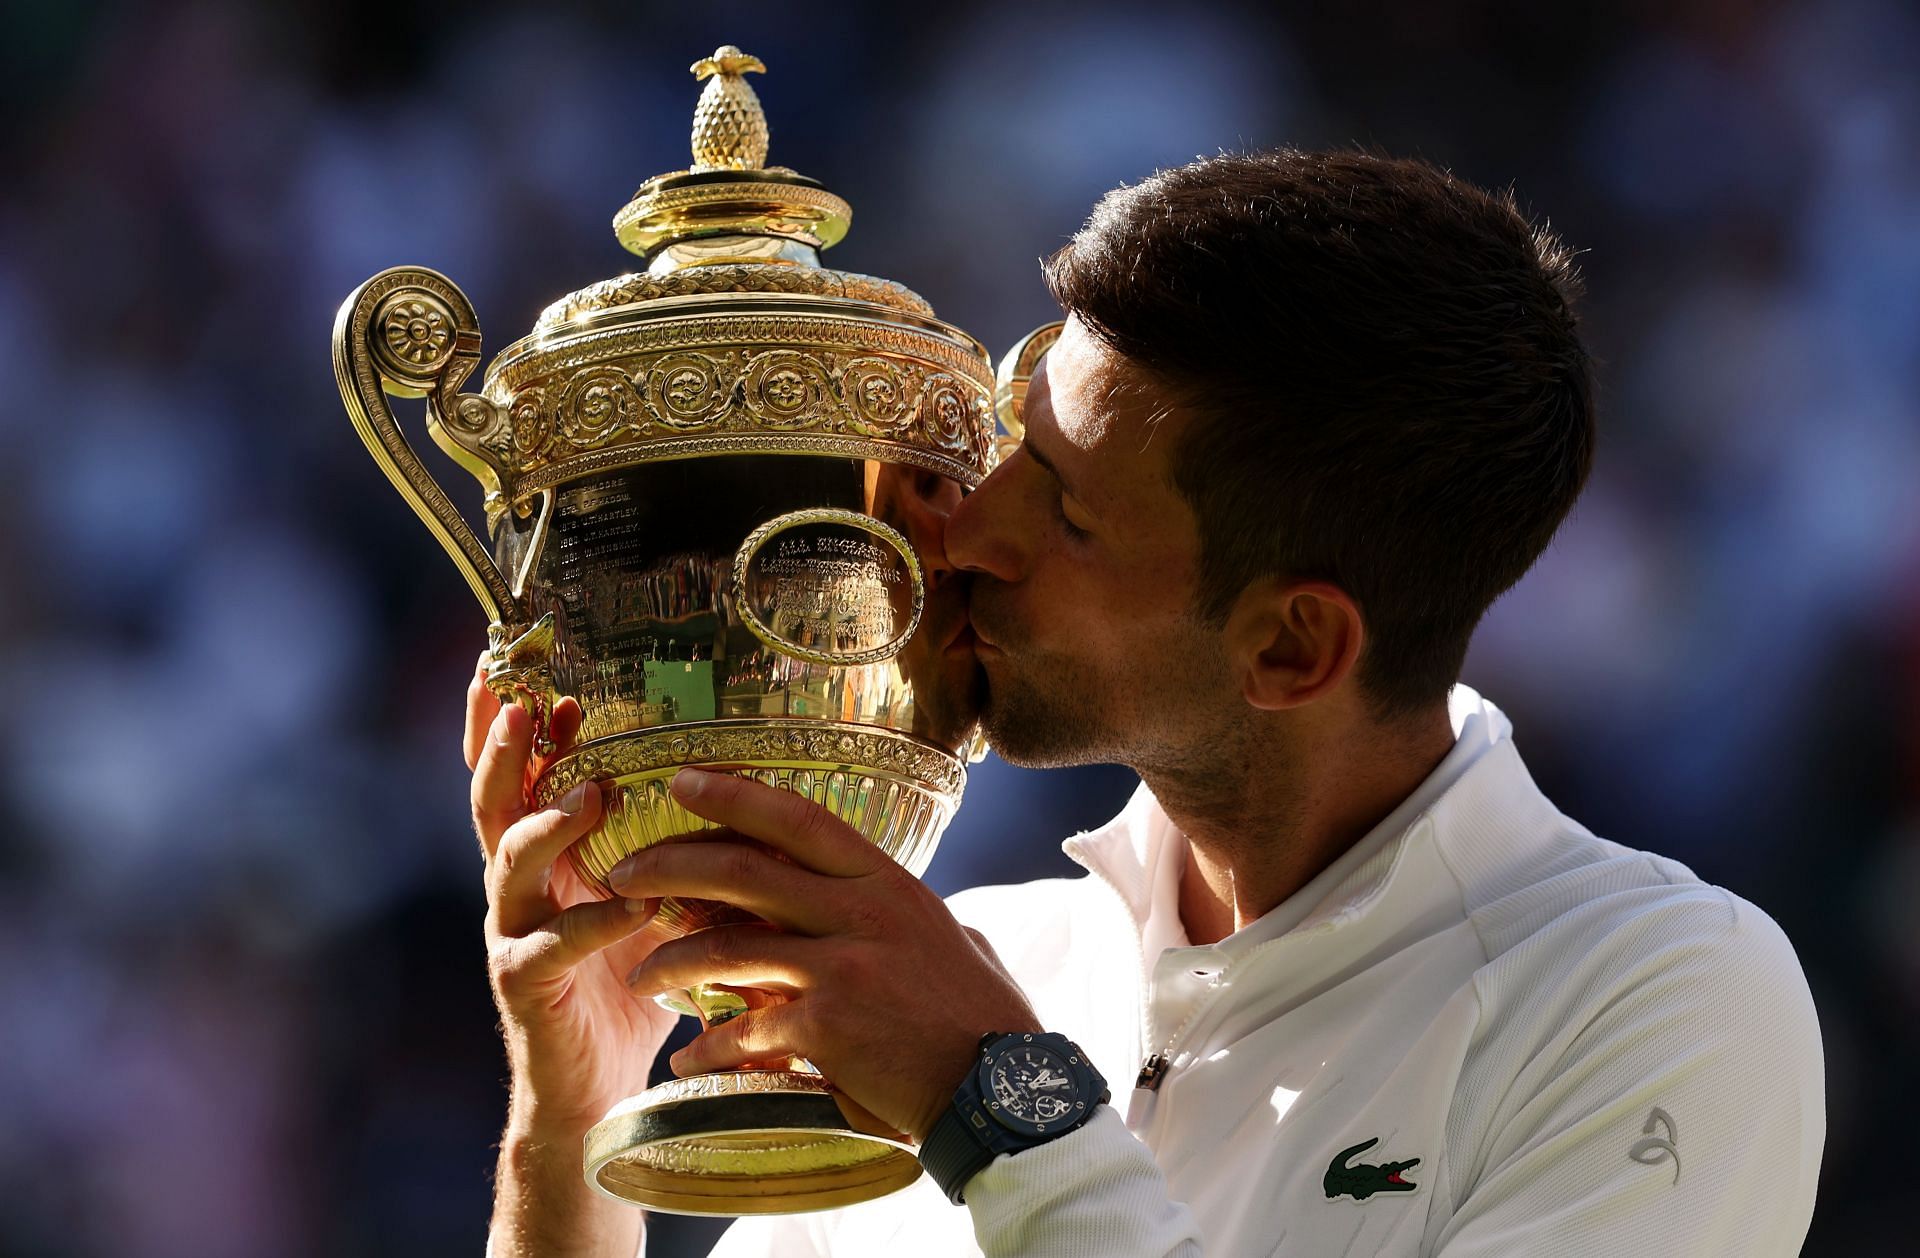 Day 14: The Championships - Wimbledon 2022